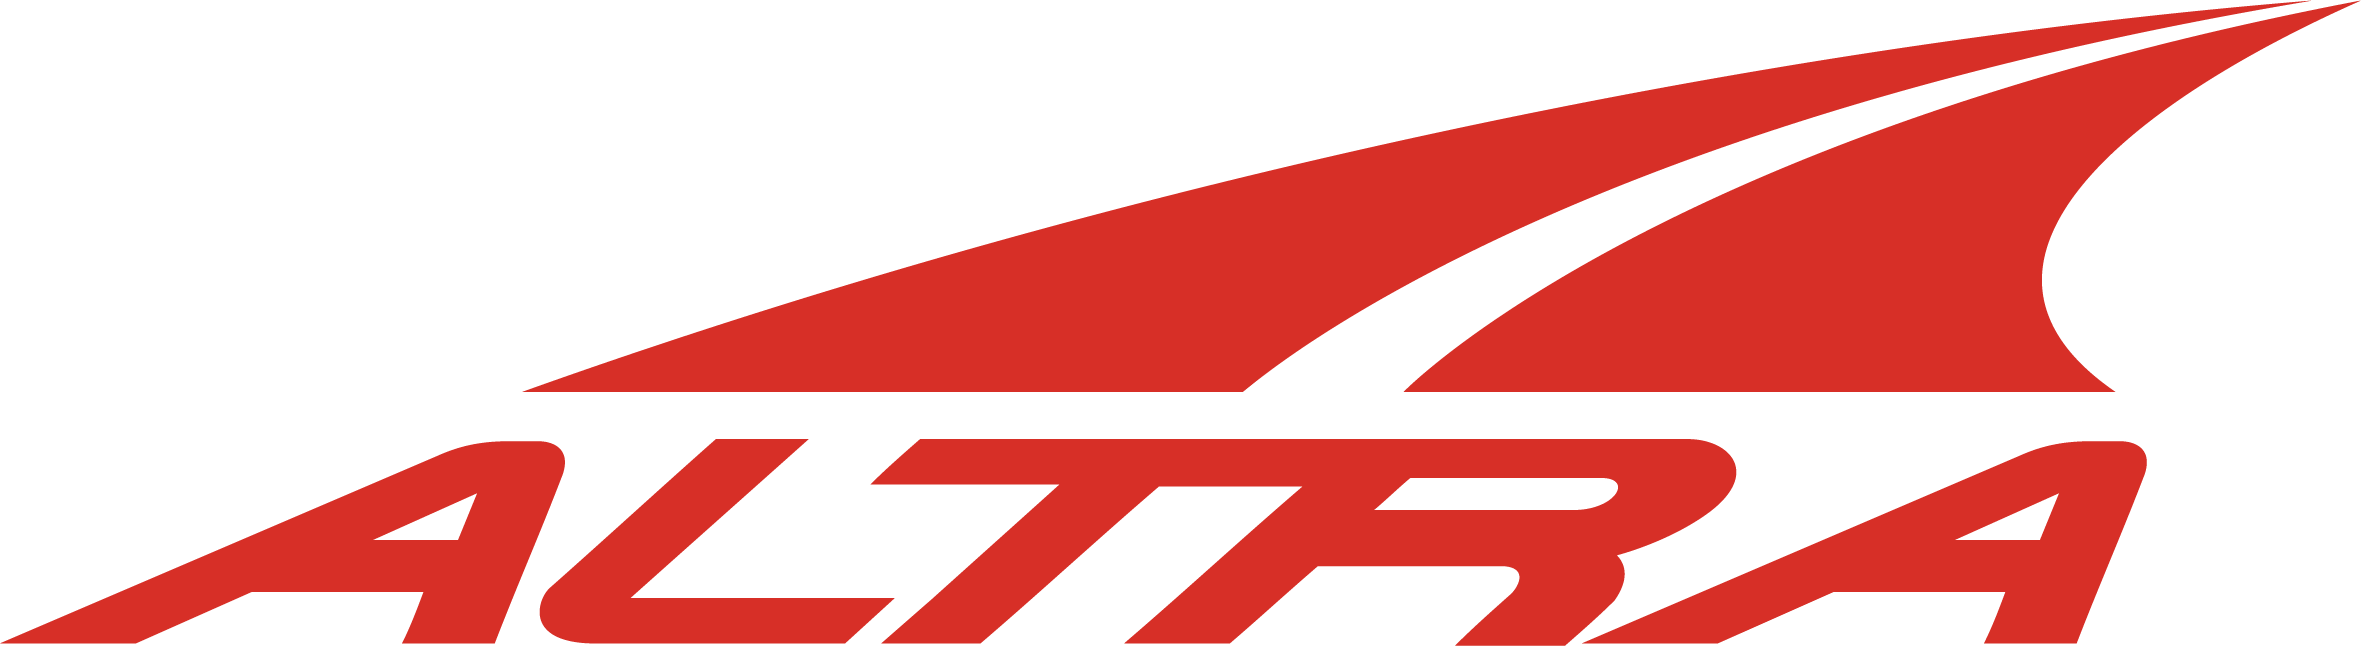 Altra_logo